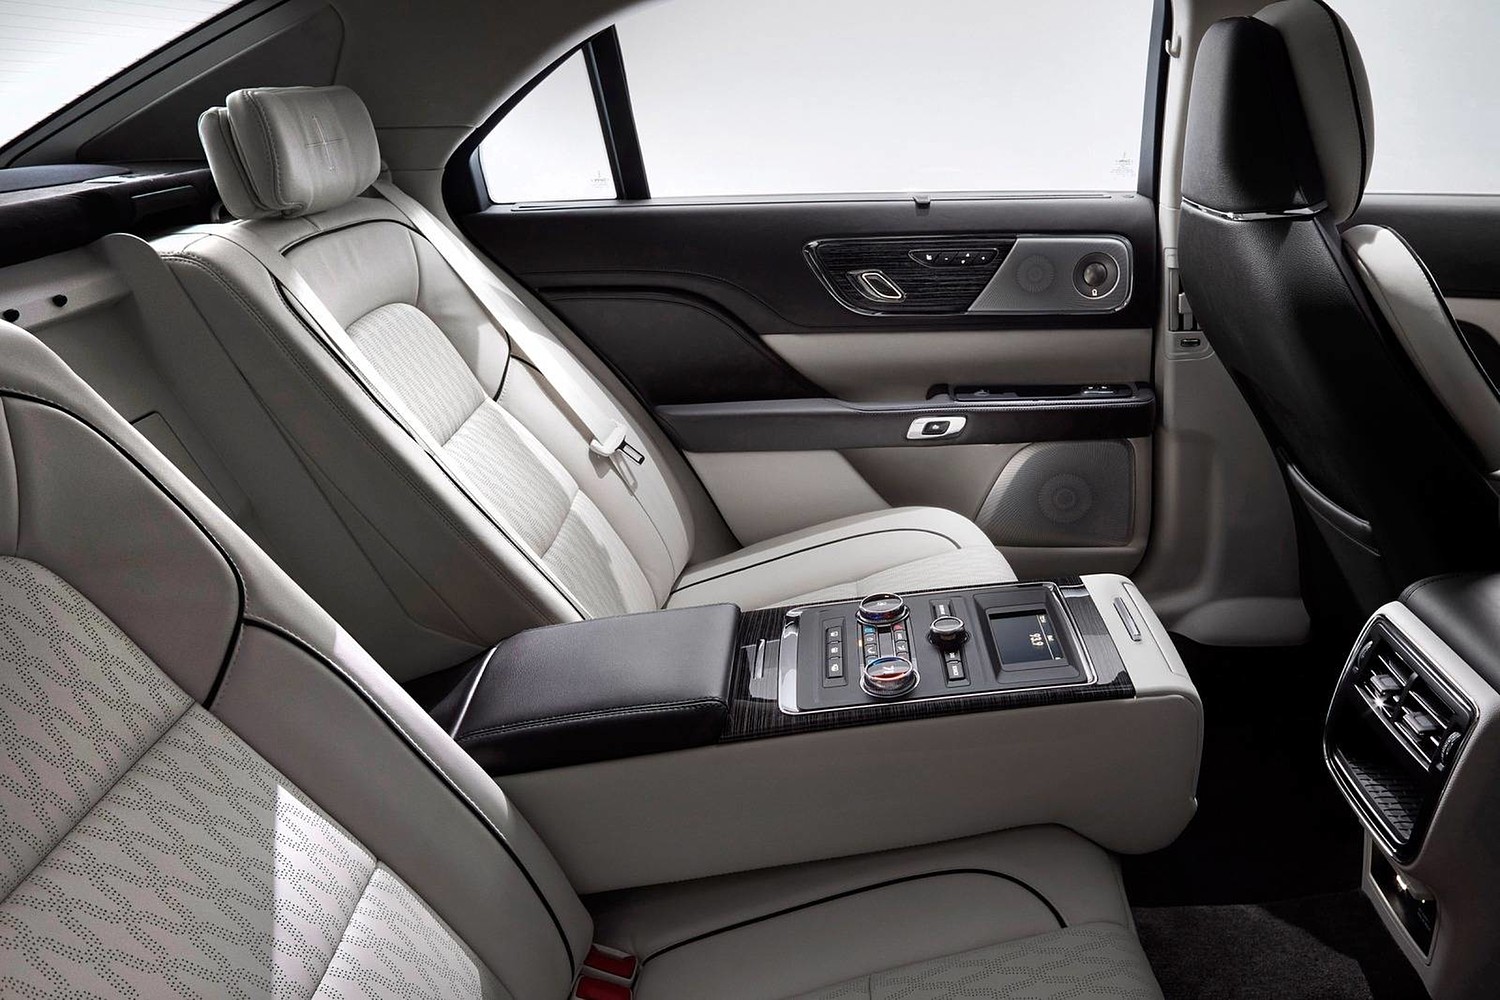 Lincoln Continental Black Label Sedan Rear Interior (2017 model year shown)